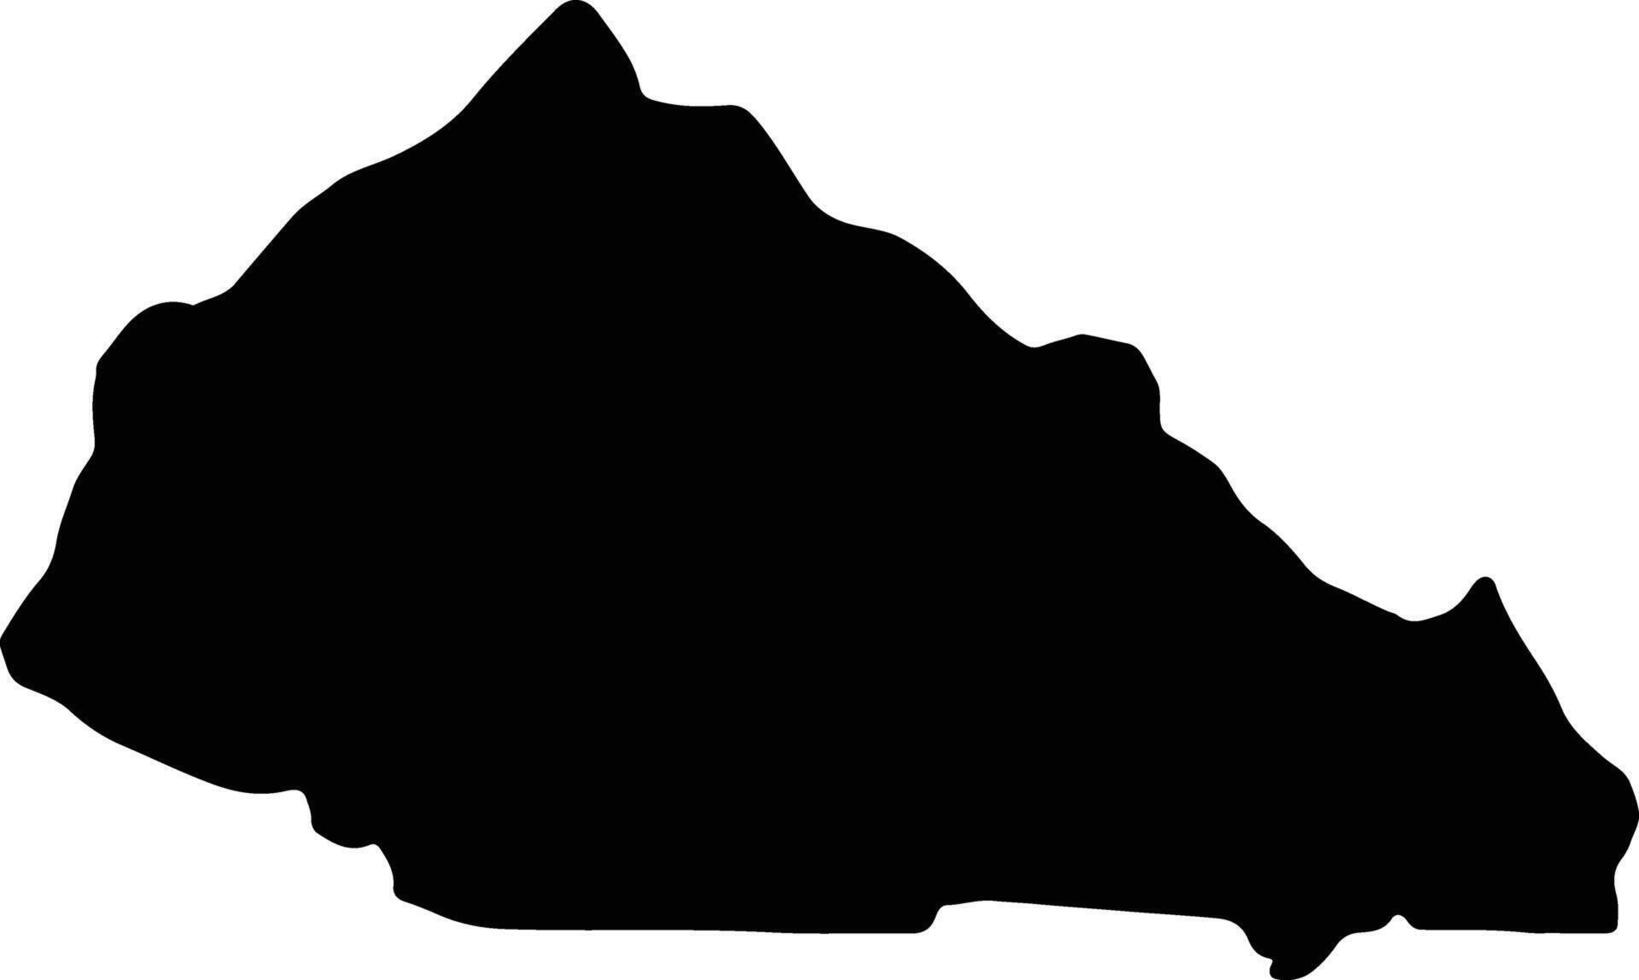 Nahouri Burkina faso silhouet kaart vector